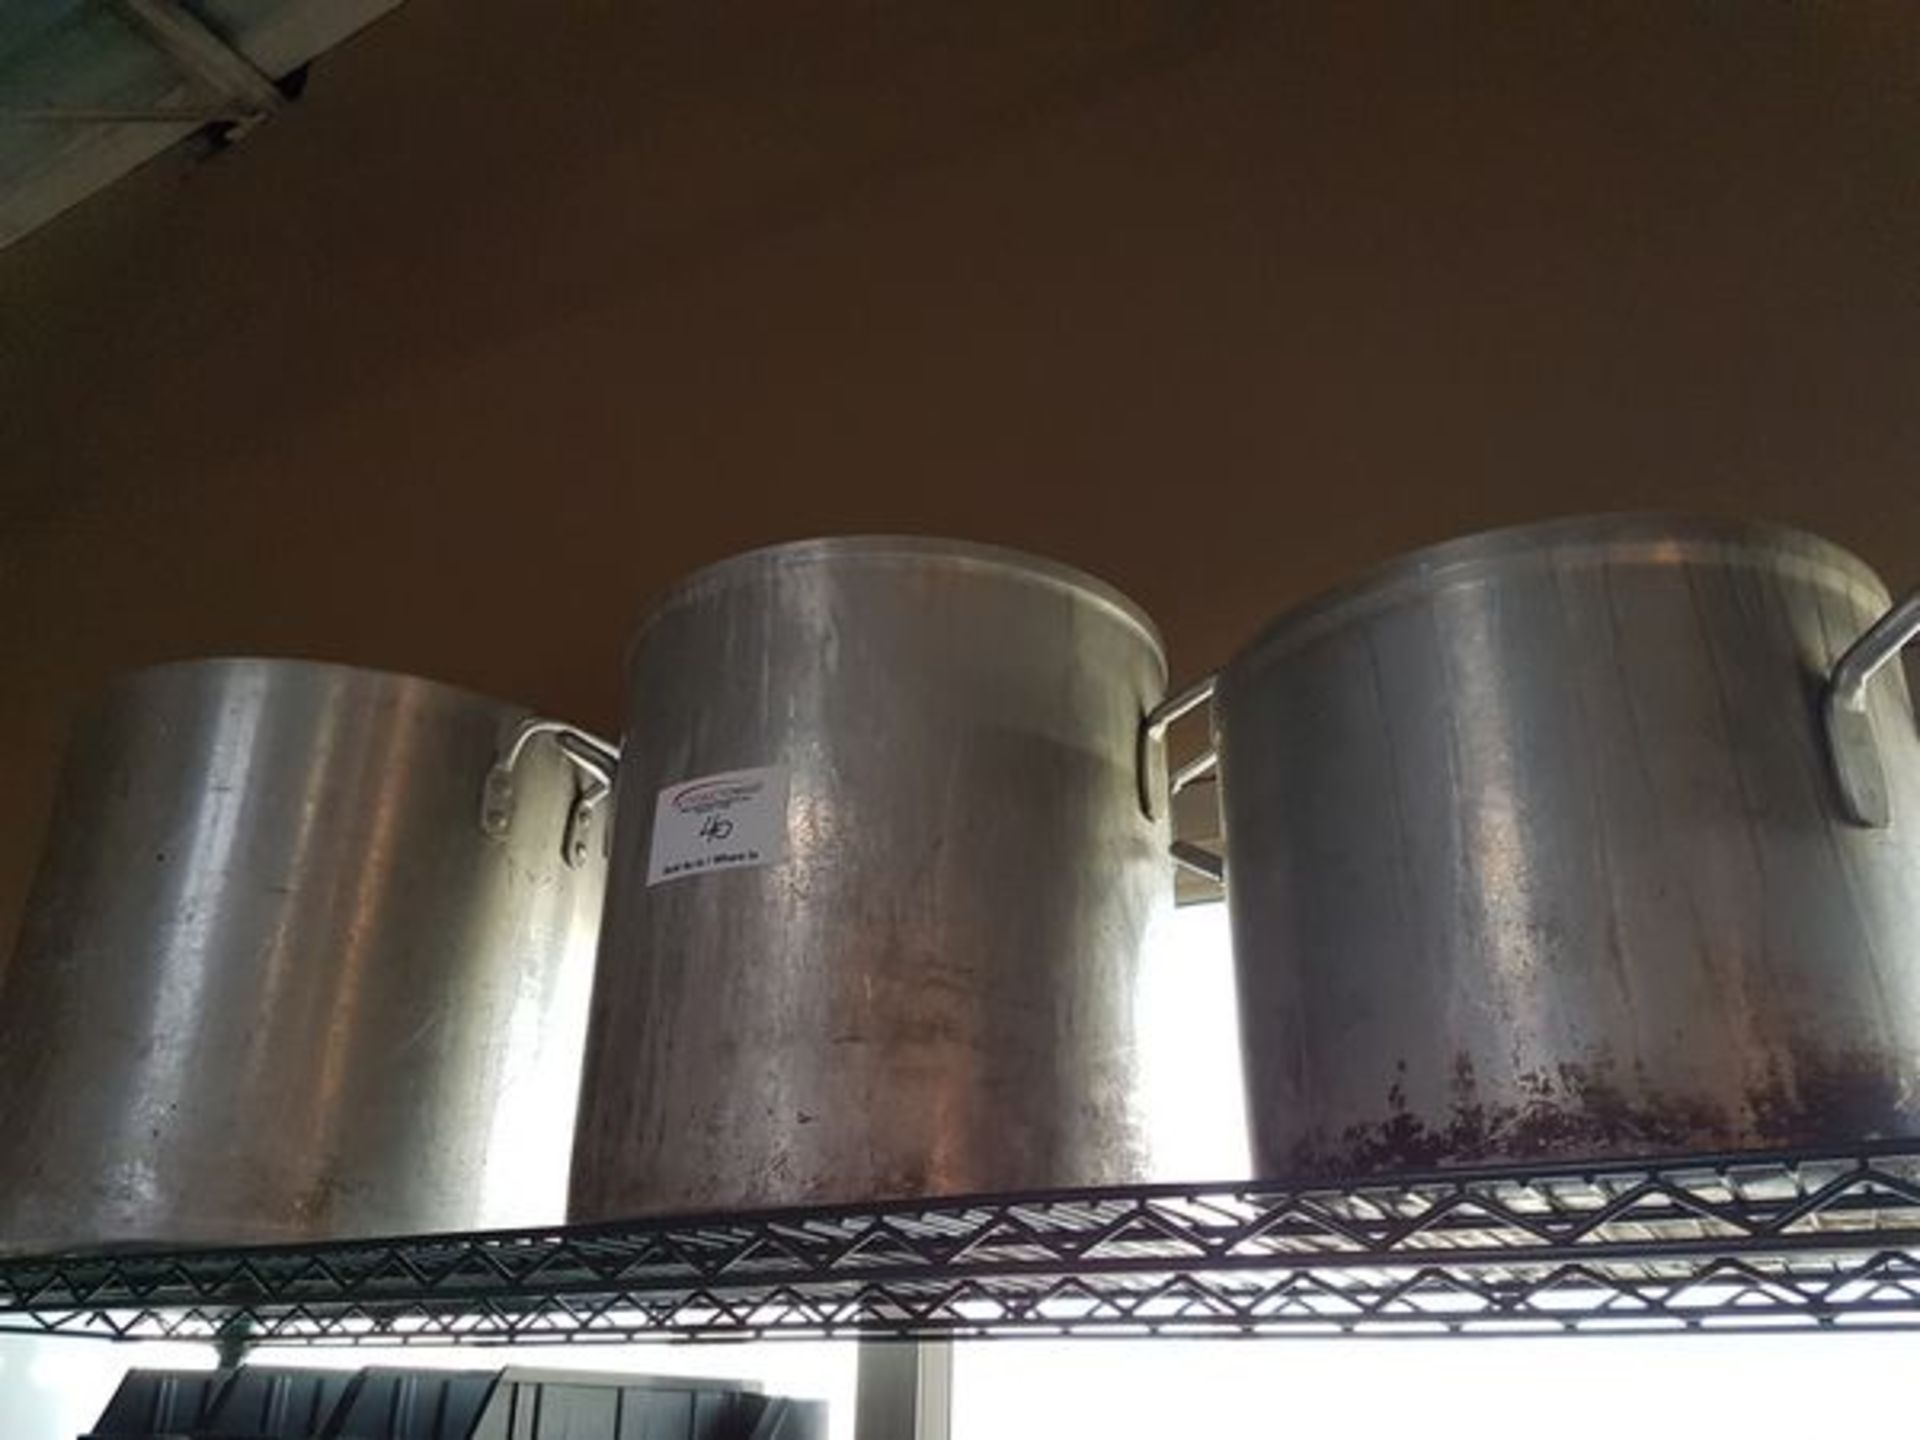 3 Large Used Aluminum Pots